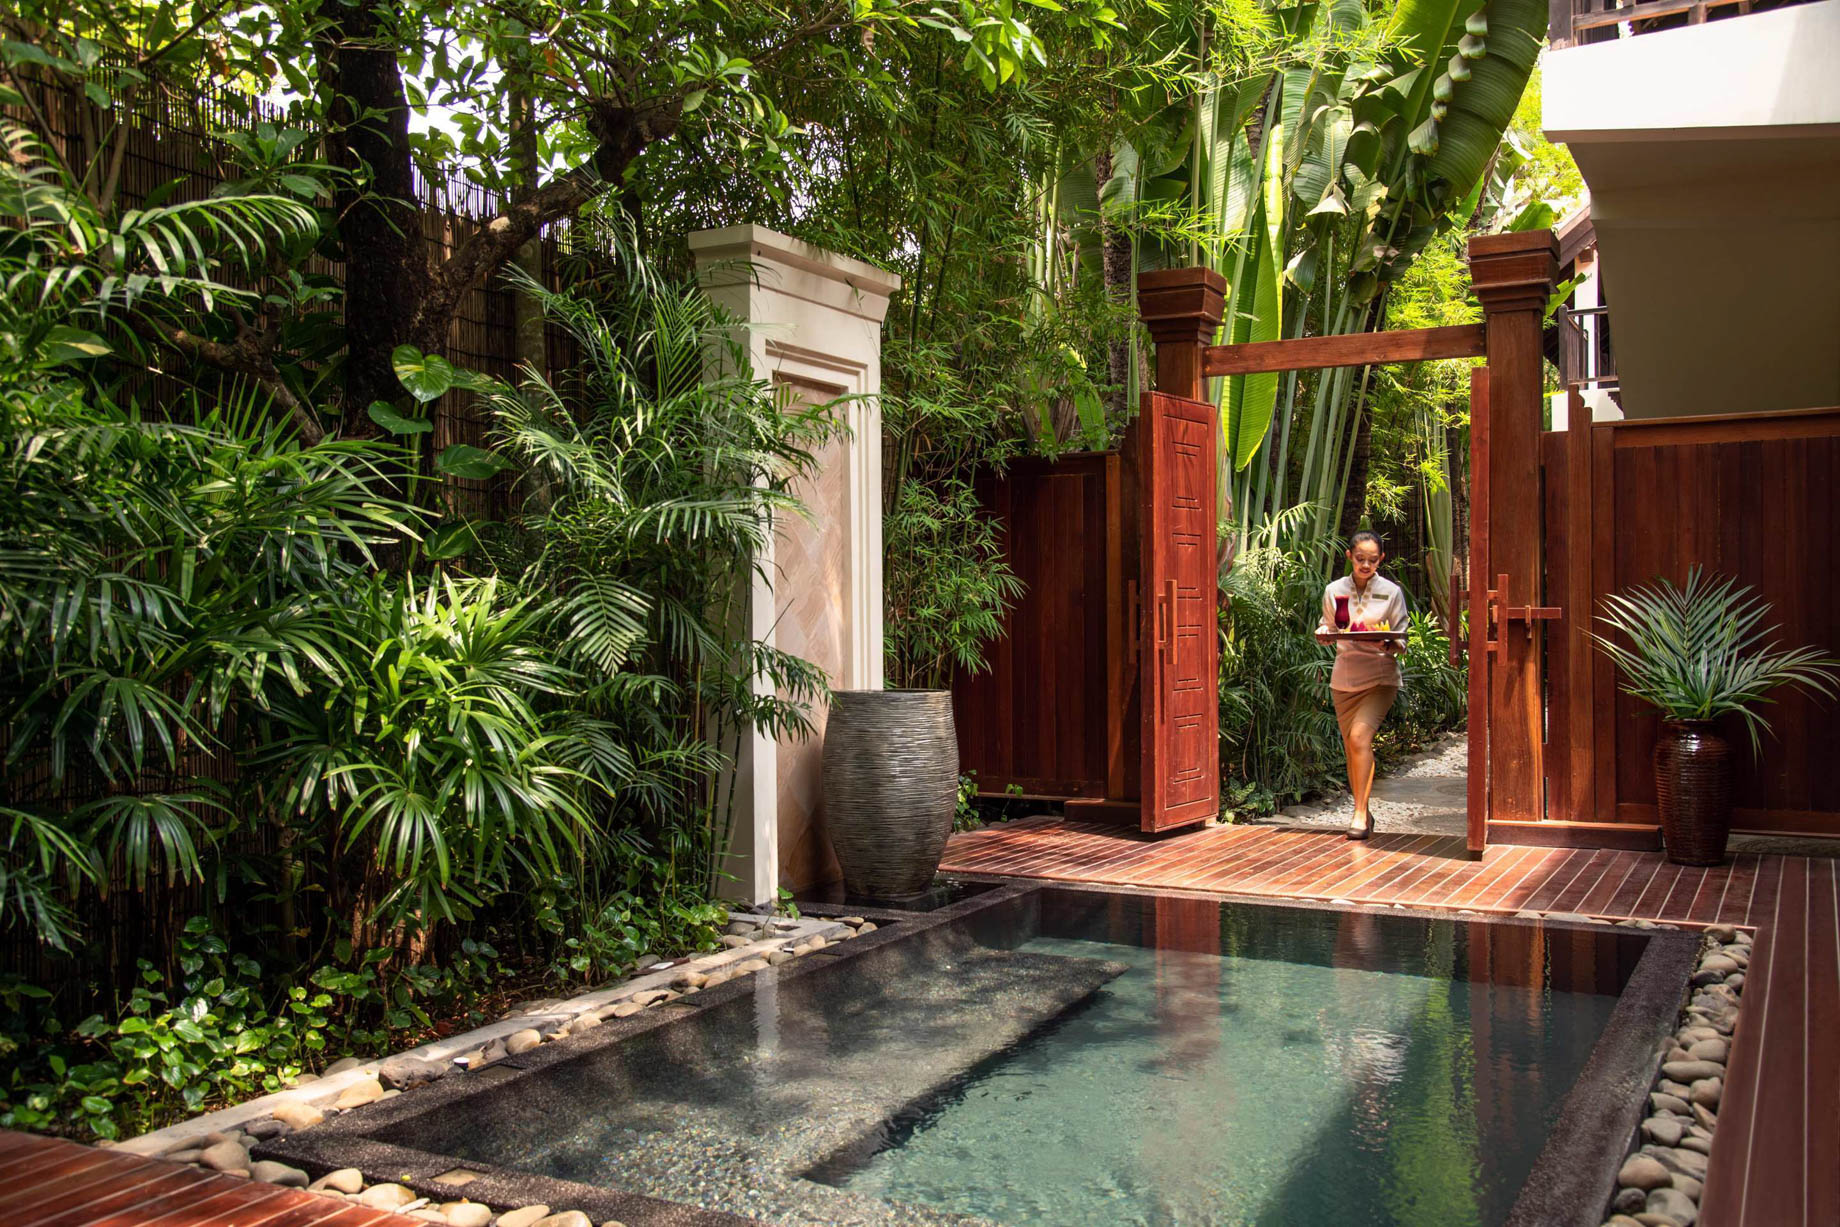 Anantara Angkor Resort – Siem Reap, Cambodia – Relaxation Pool